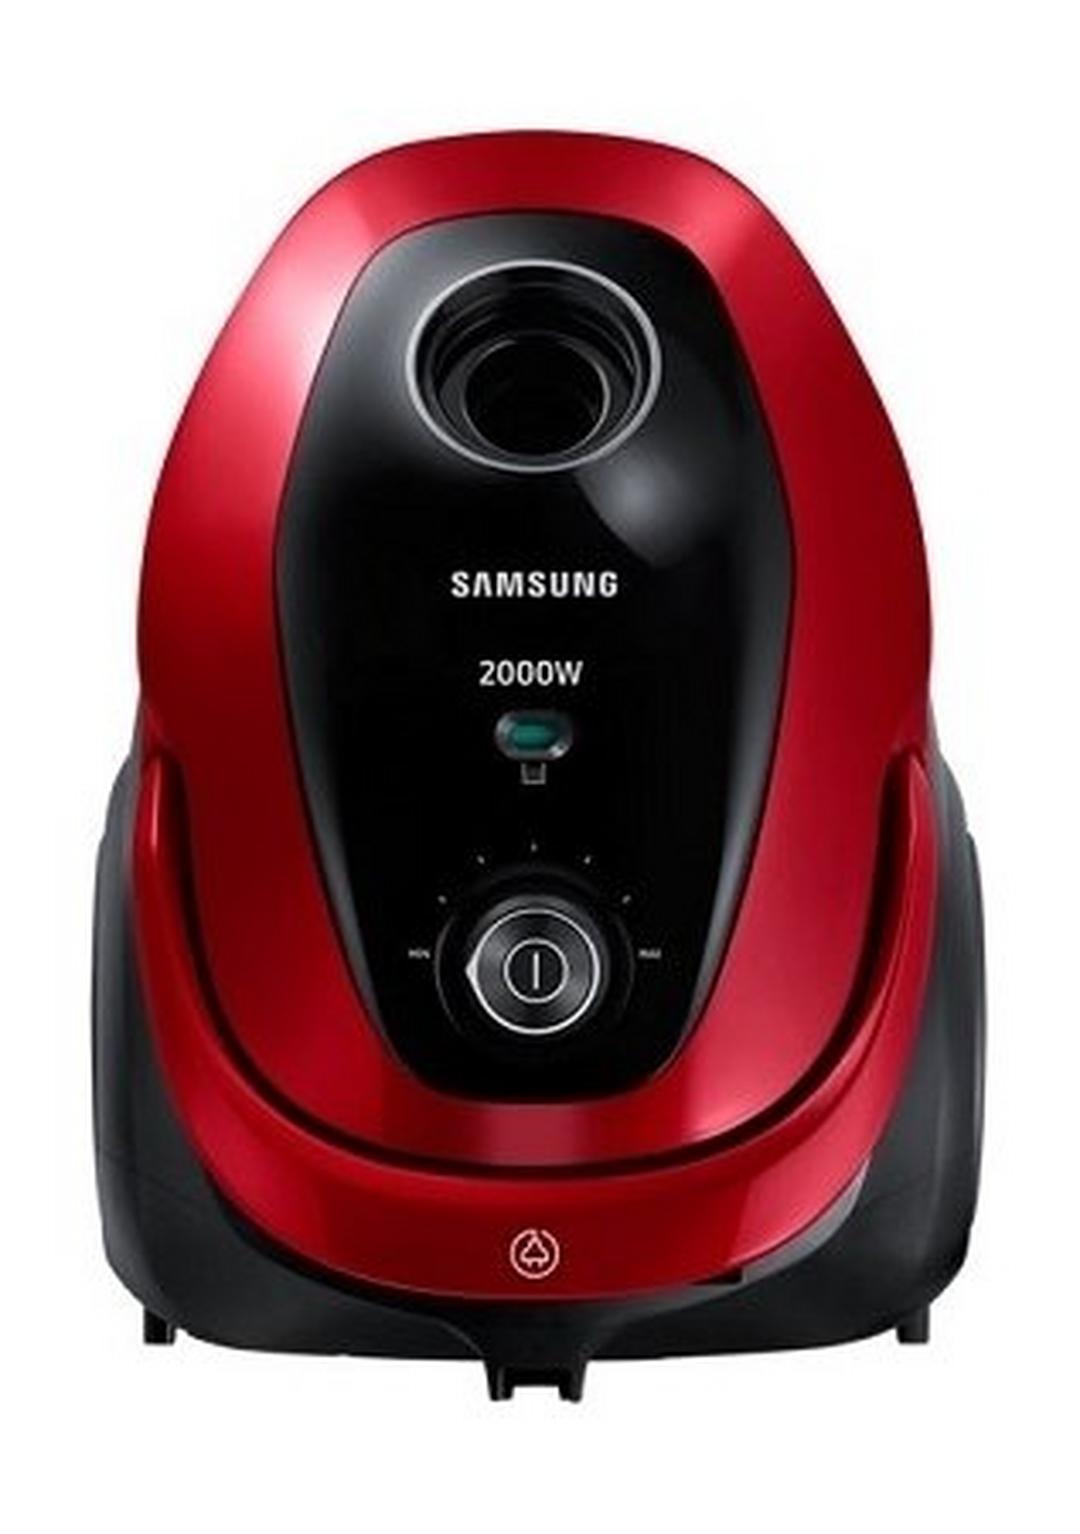 Samsung S-450 2000W 2.5 Liters Vacuum Cleaner (VC20M2530WR)